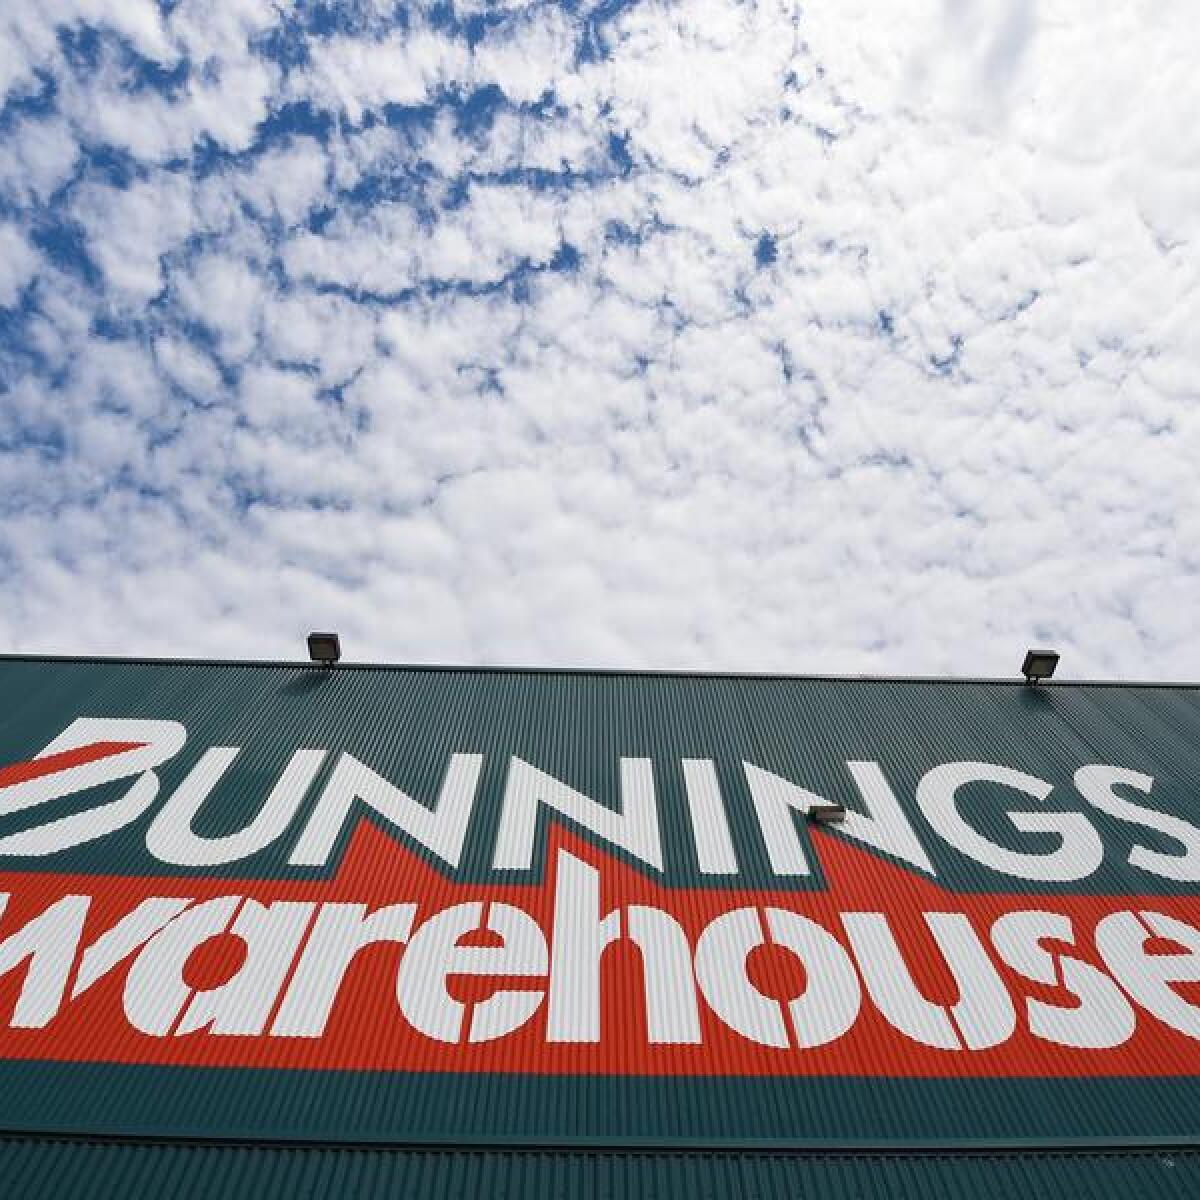 A Bunnings warehouse